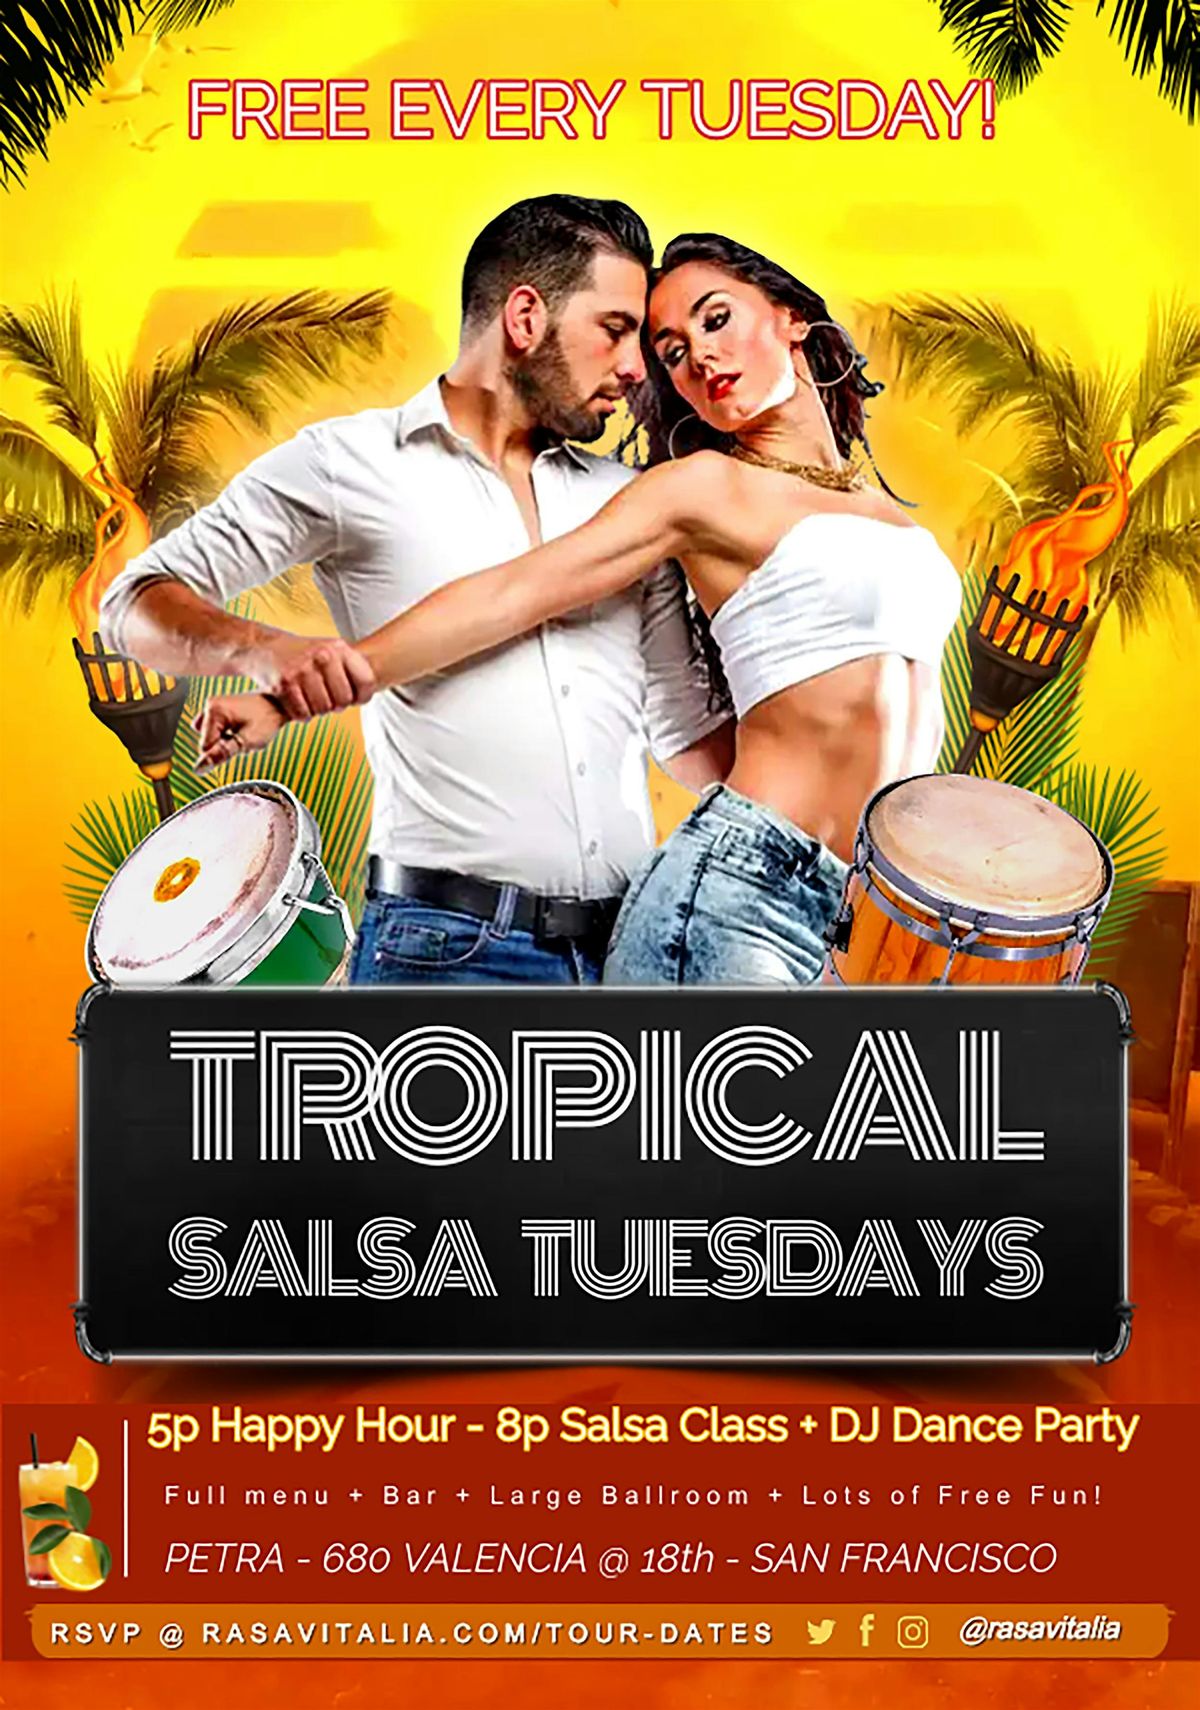 Tropical Salsa Tuesdays! FREE! San Francisco